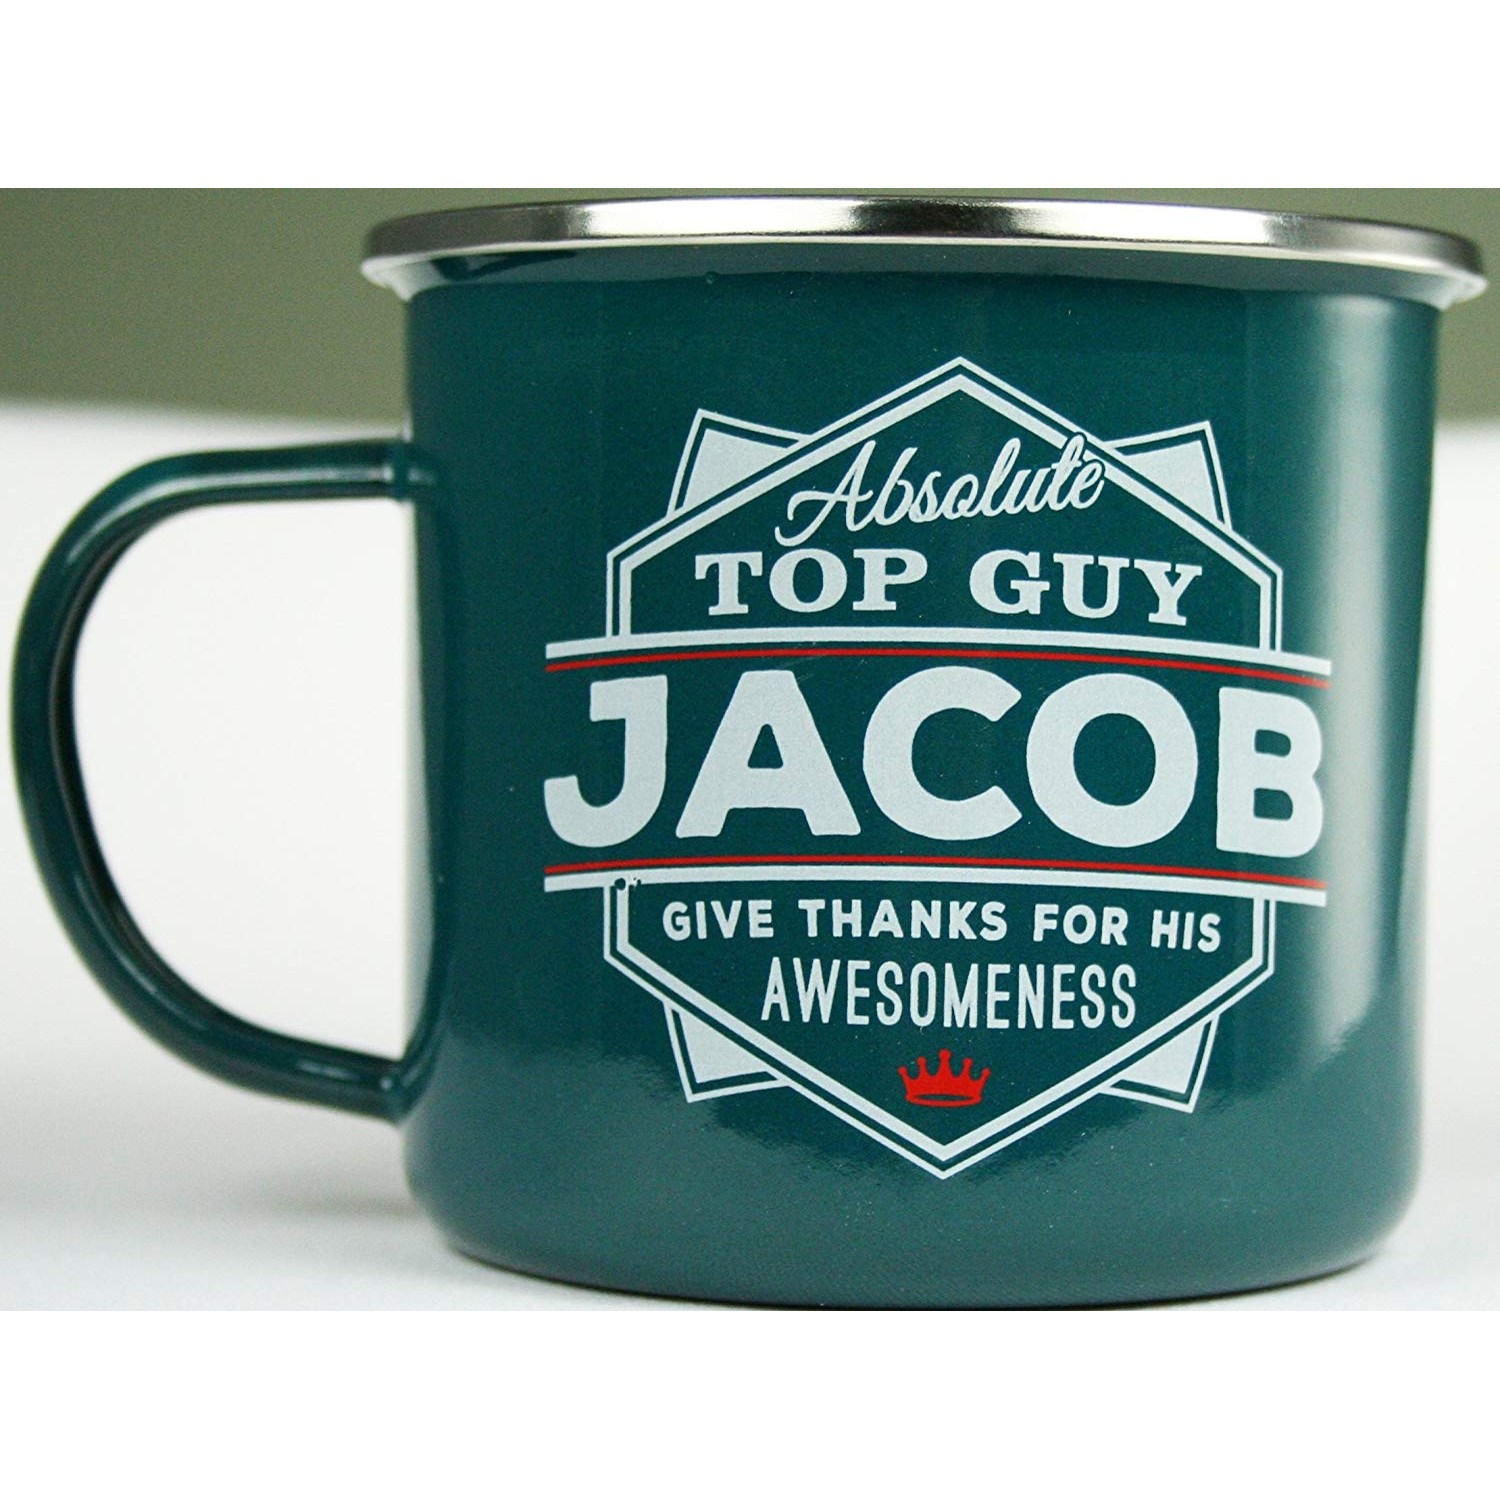 Top Guy Enamel Mugs (Jacob)